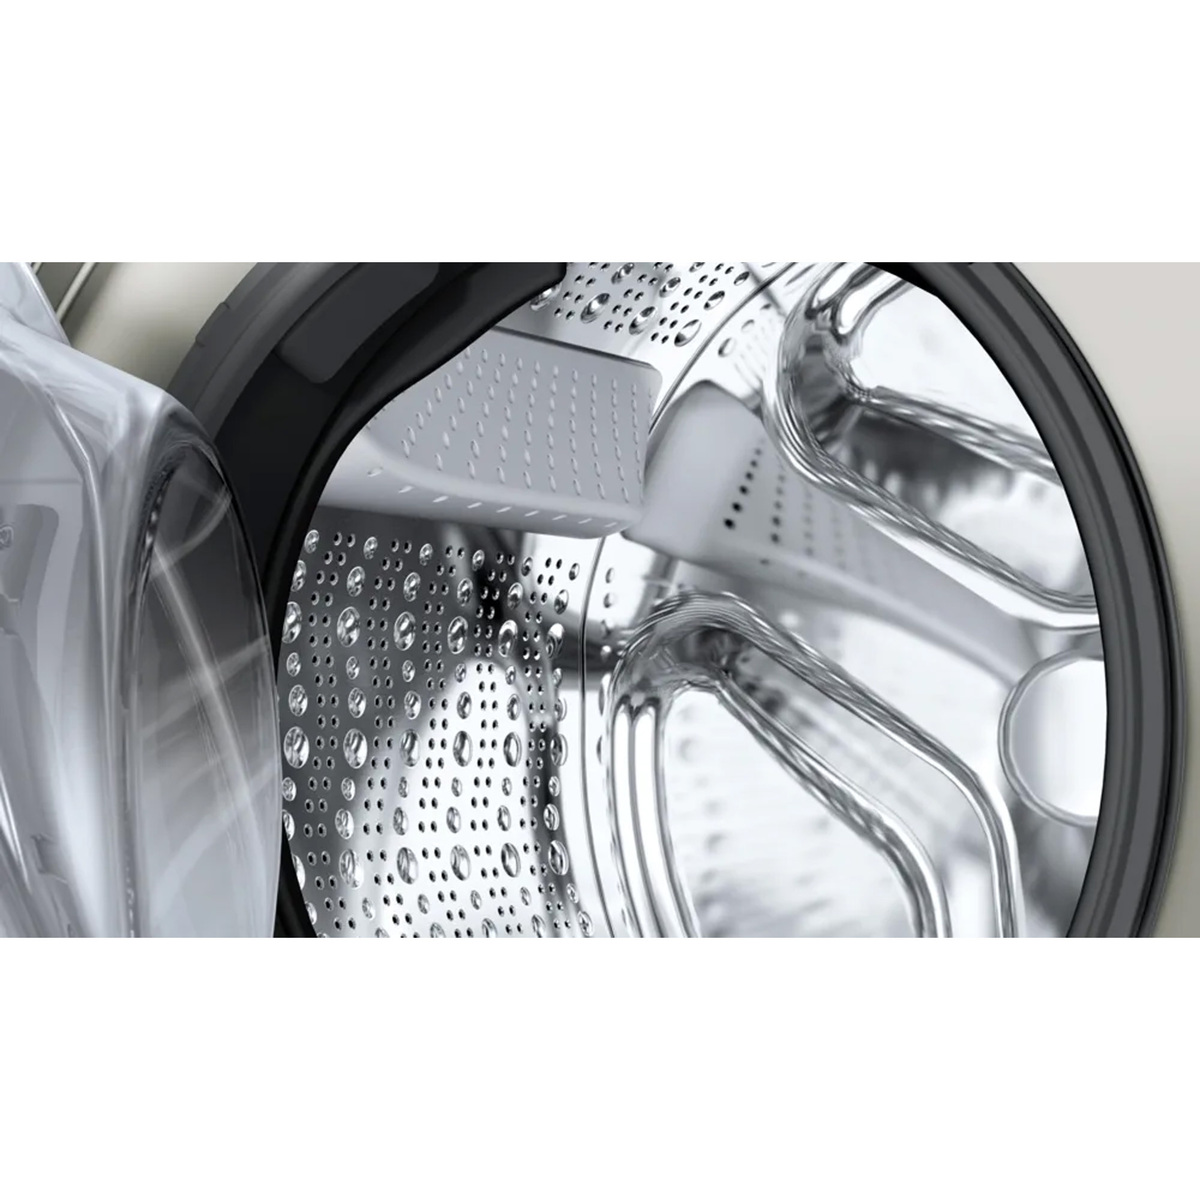 Bosch Series 4 Front Load Washing Machine, 8 kg, 1400 RPM, Silver Inox, WAN28283GC